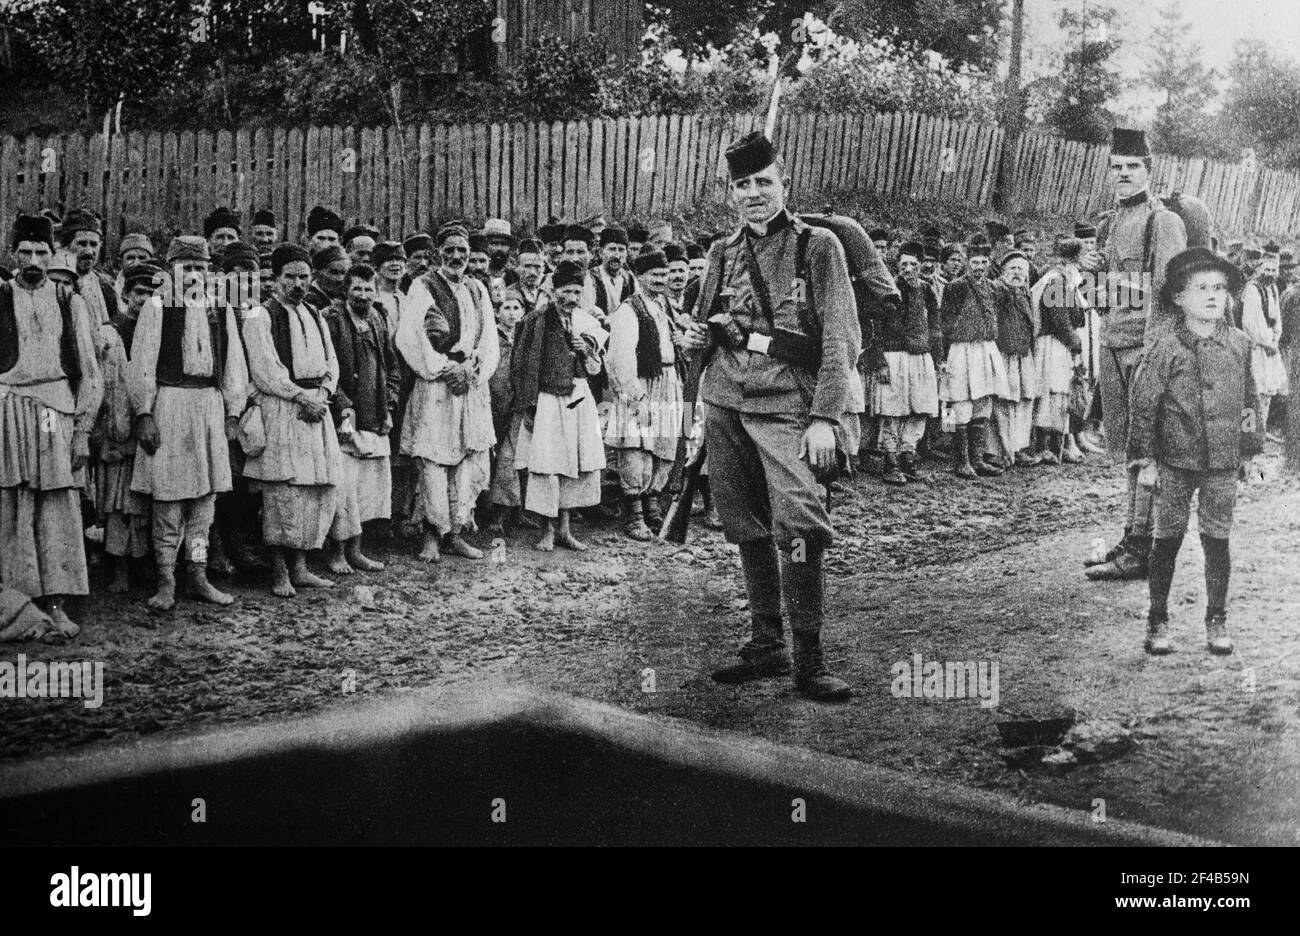 Serbian men, possibly civilians, taken prisoner at Kreka, near Tuzla, Austro-Hungarian Empire (now in Bosnia-Herzogovina) during World War I ca. 1914-1915 Stock Photo